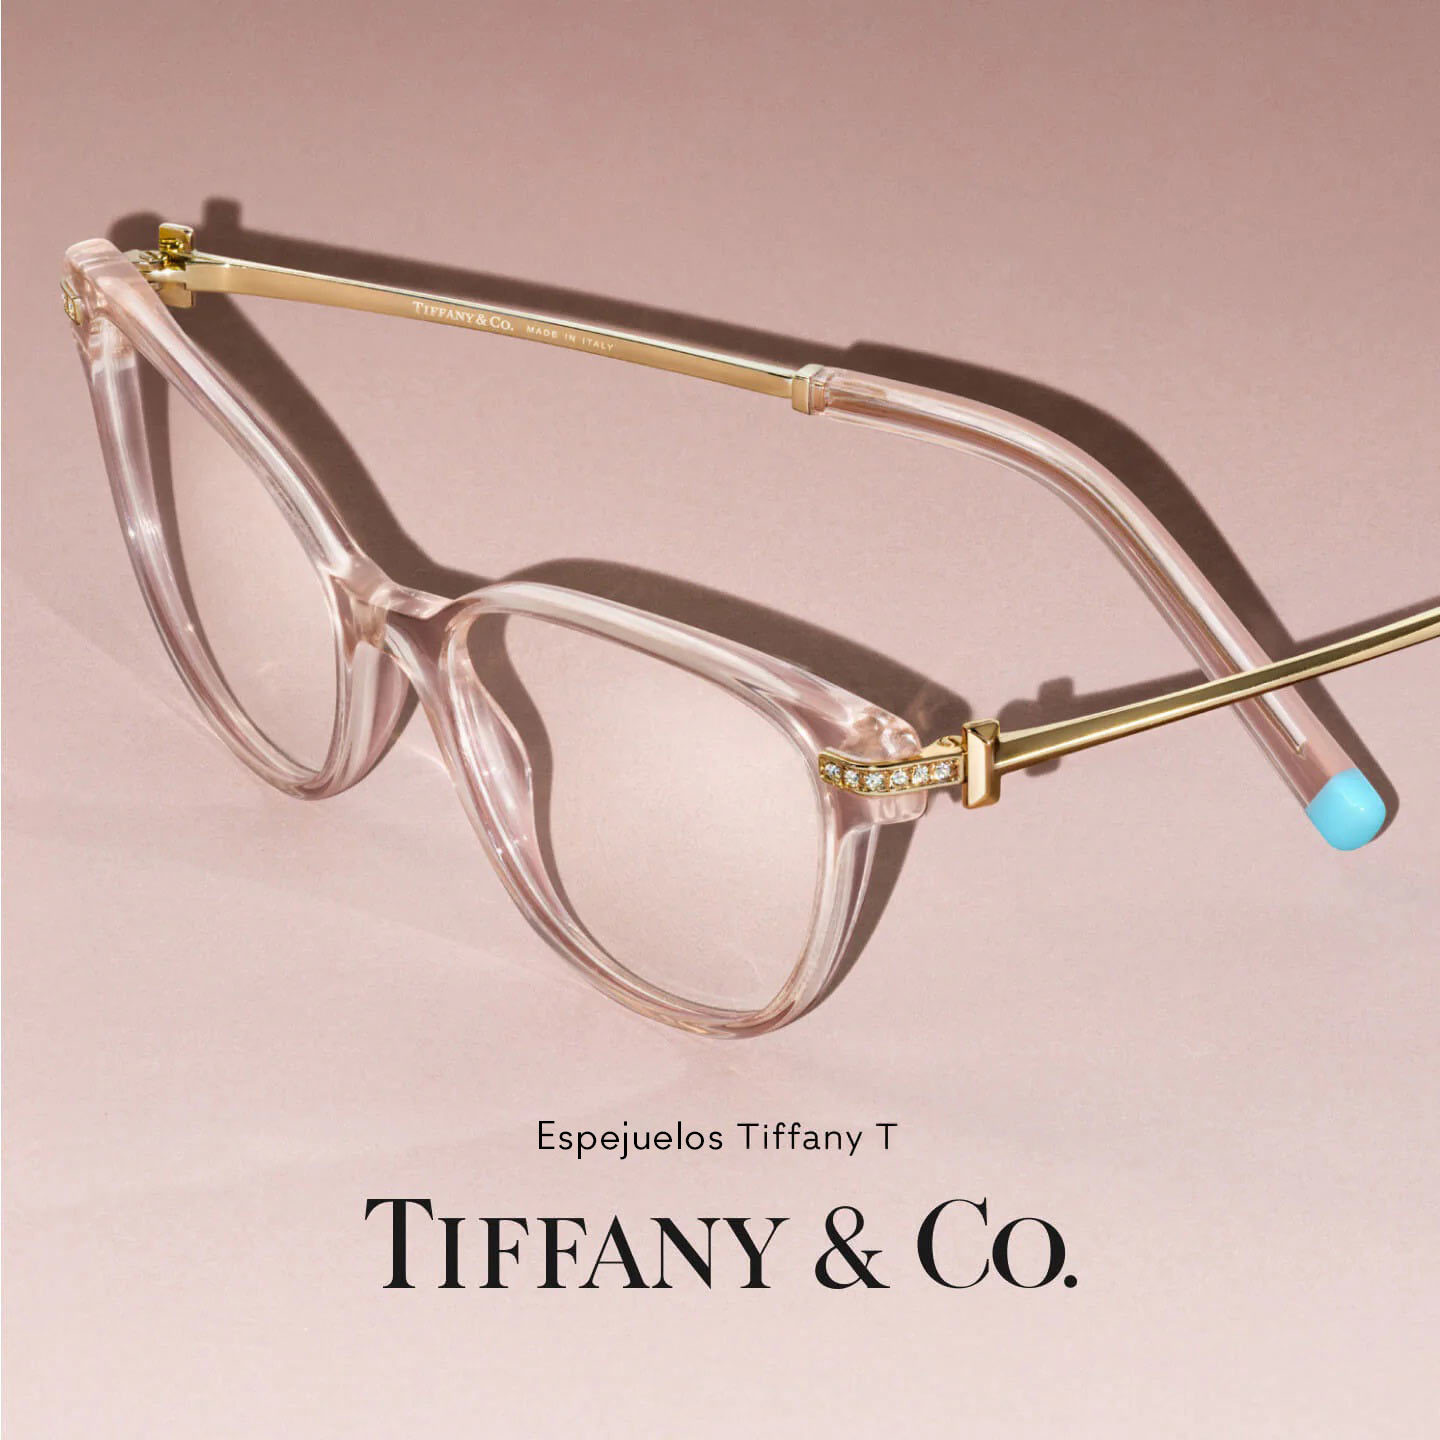 Tiffany exclusive image